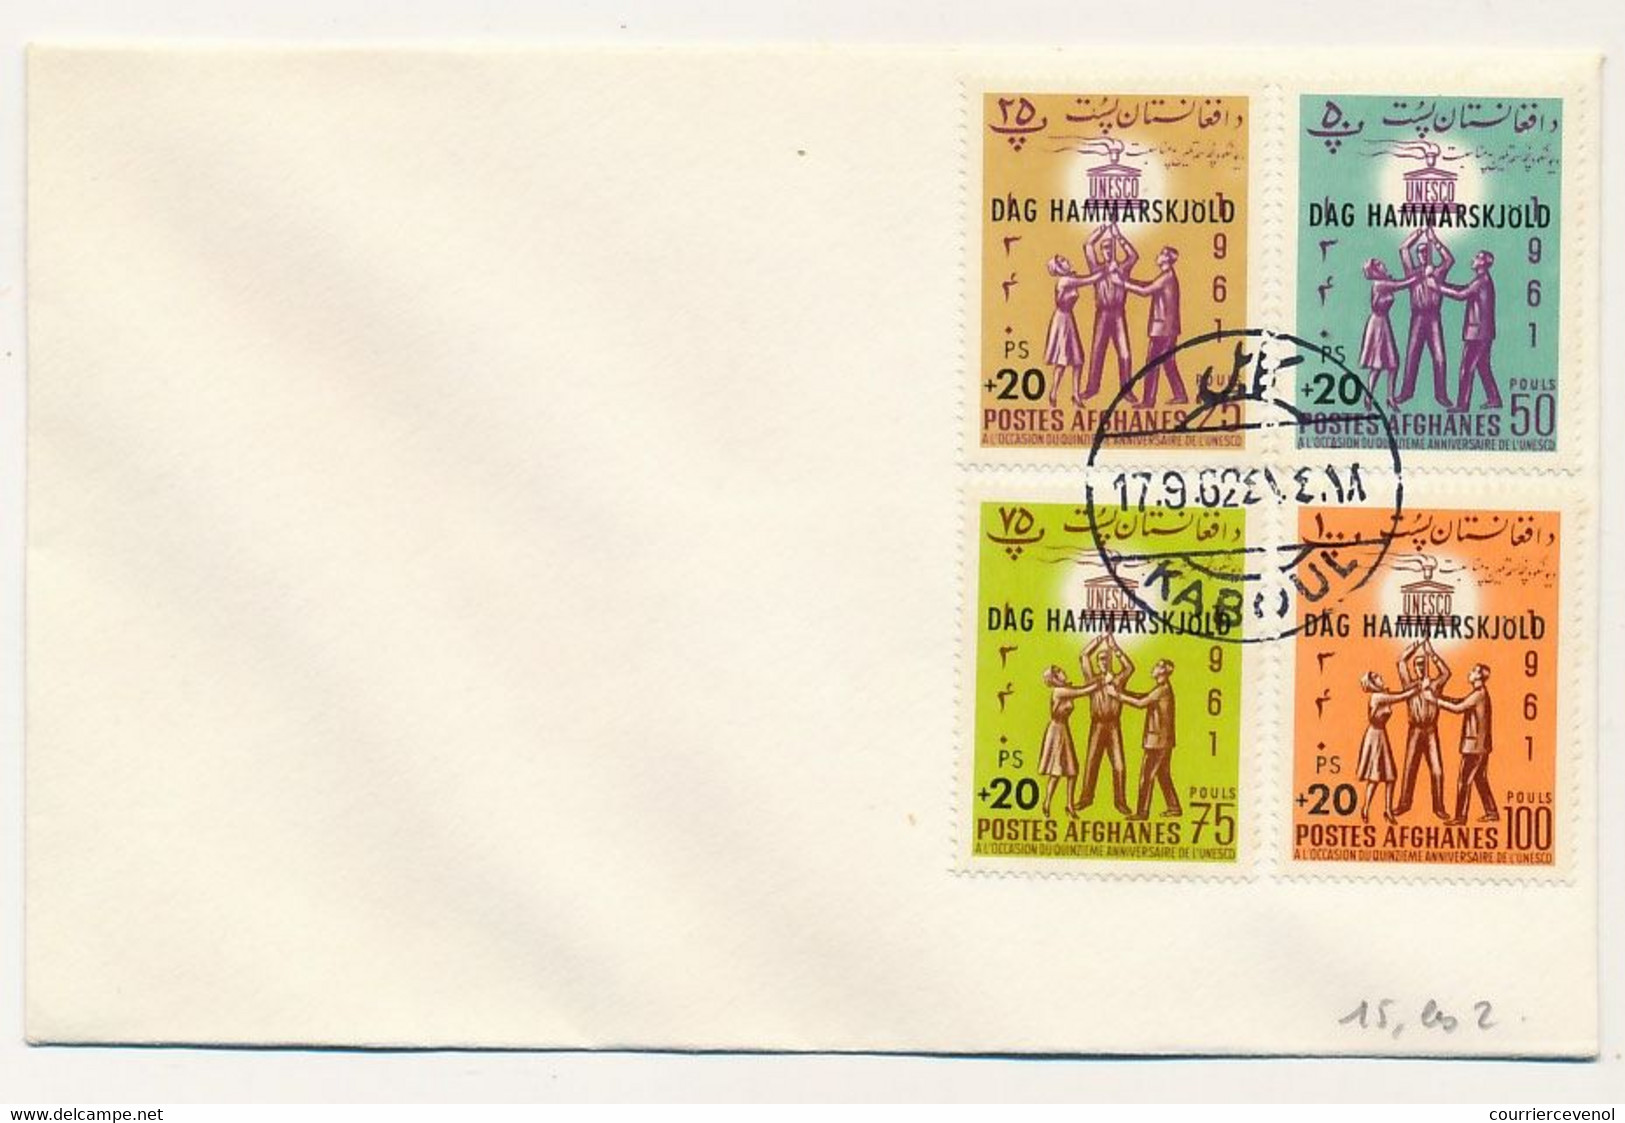 AFGHANISTAN - 2 Enveloppes Non Adressées - 9 Valeurs UNECO Surch. Dag Hammarskjold - KABOUL - 17/9/1962 - Afganistán